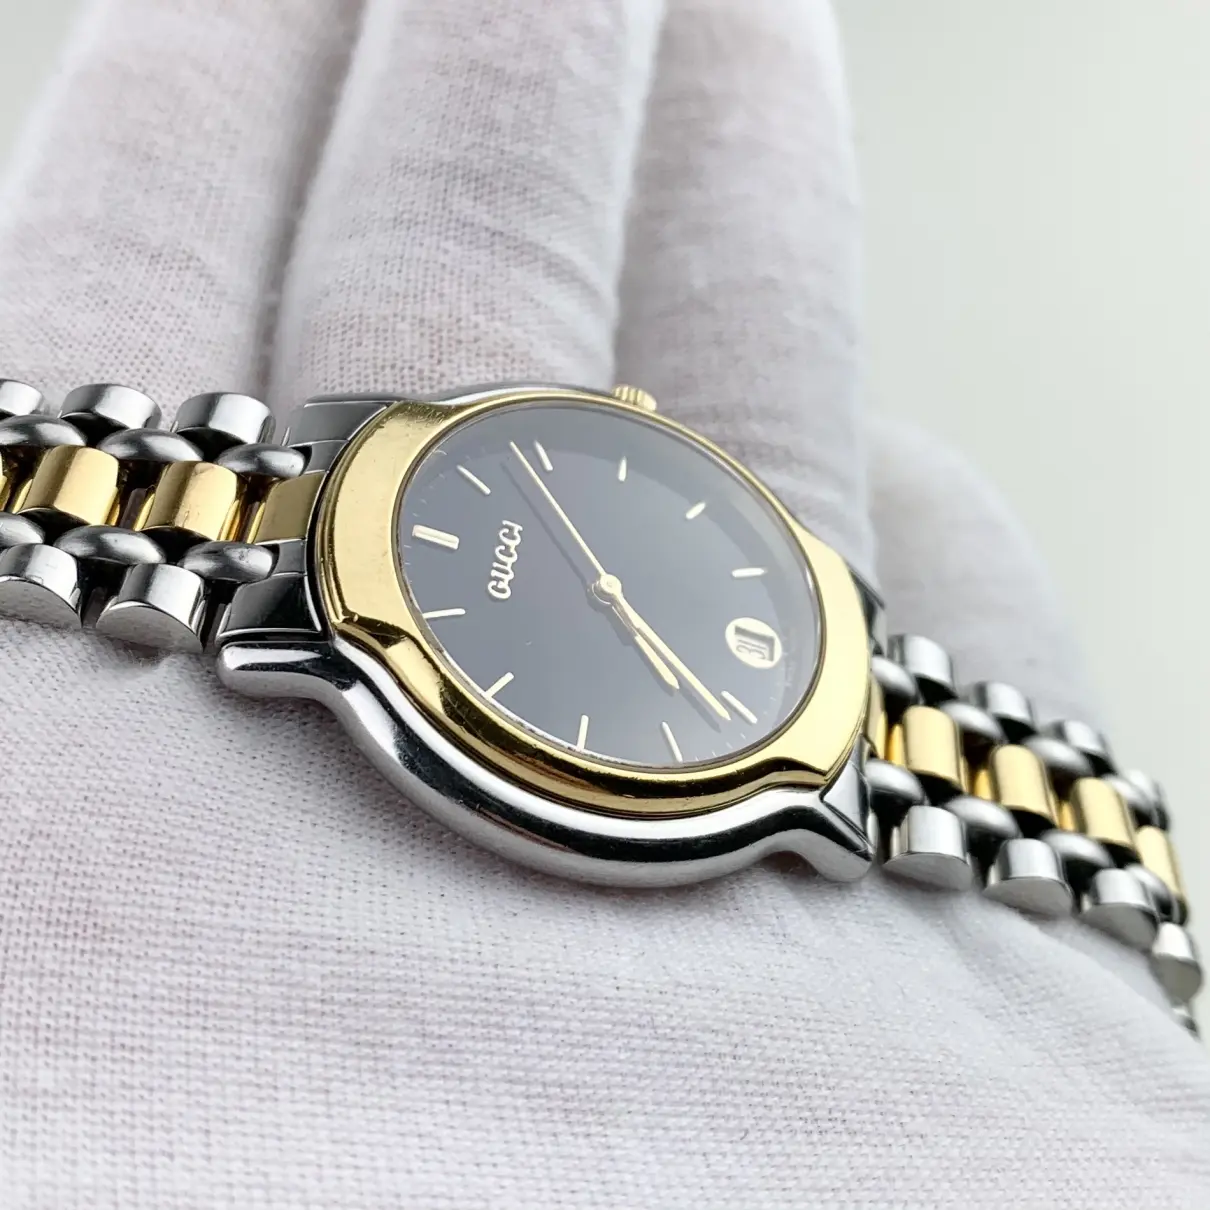 Buy Gucci Watch online - Vintage